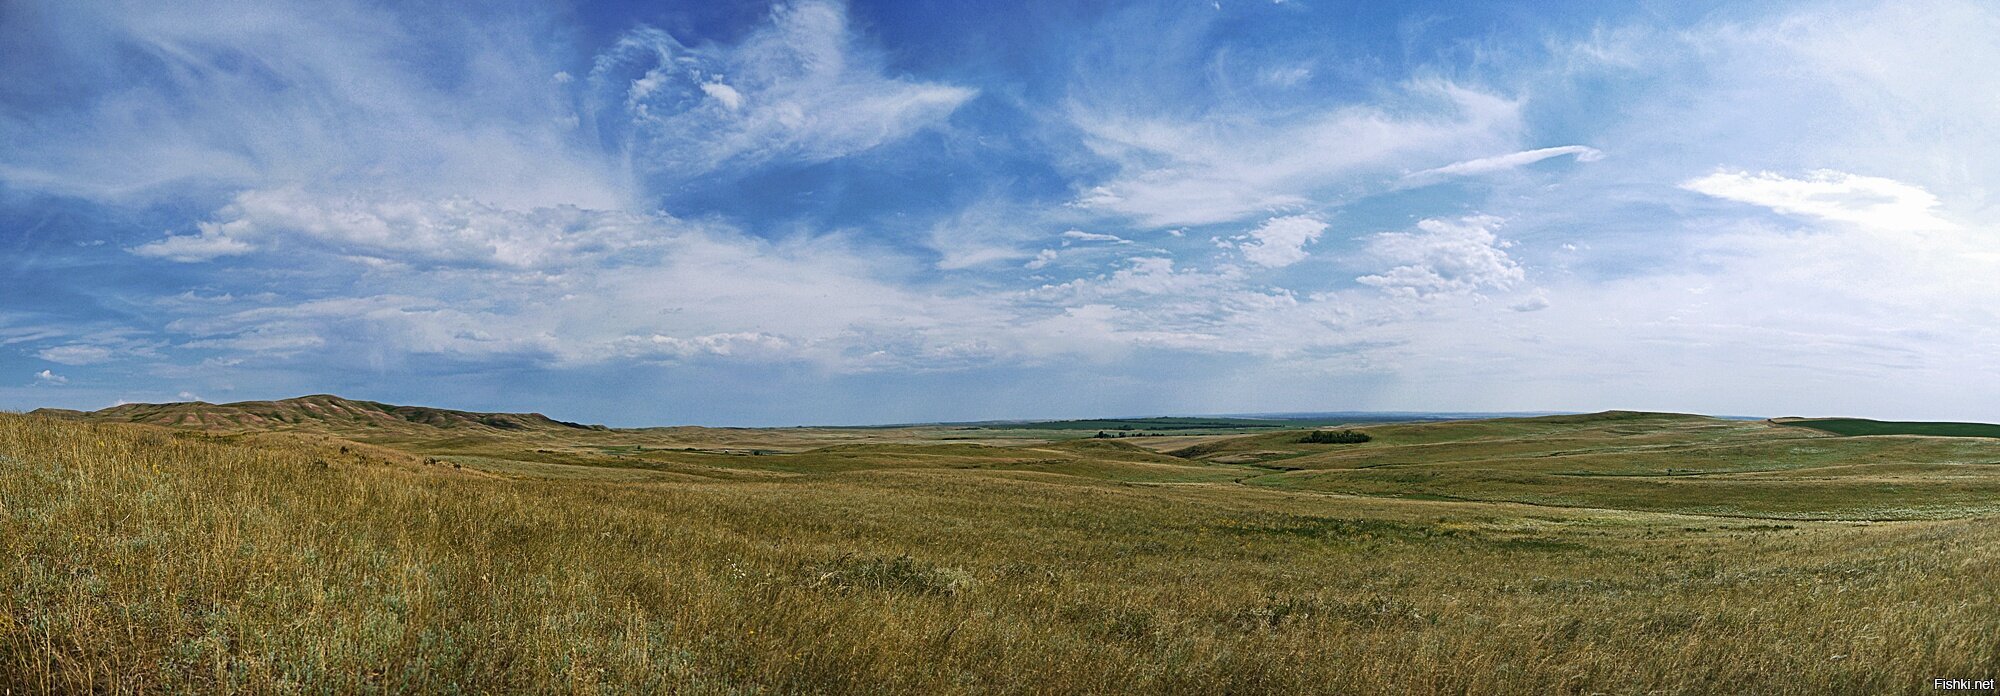 Донгузская степь панорама